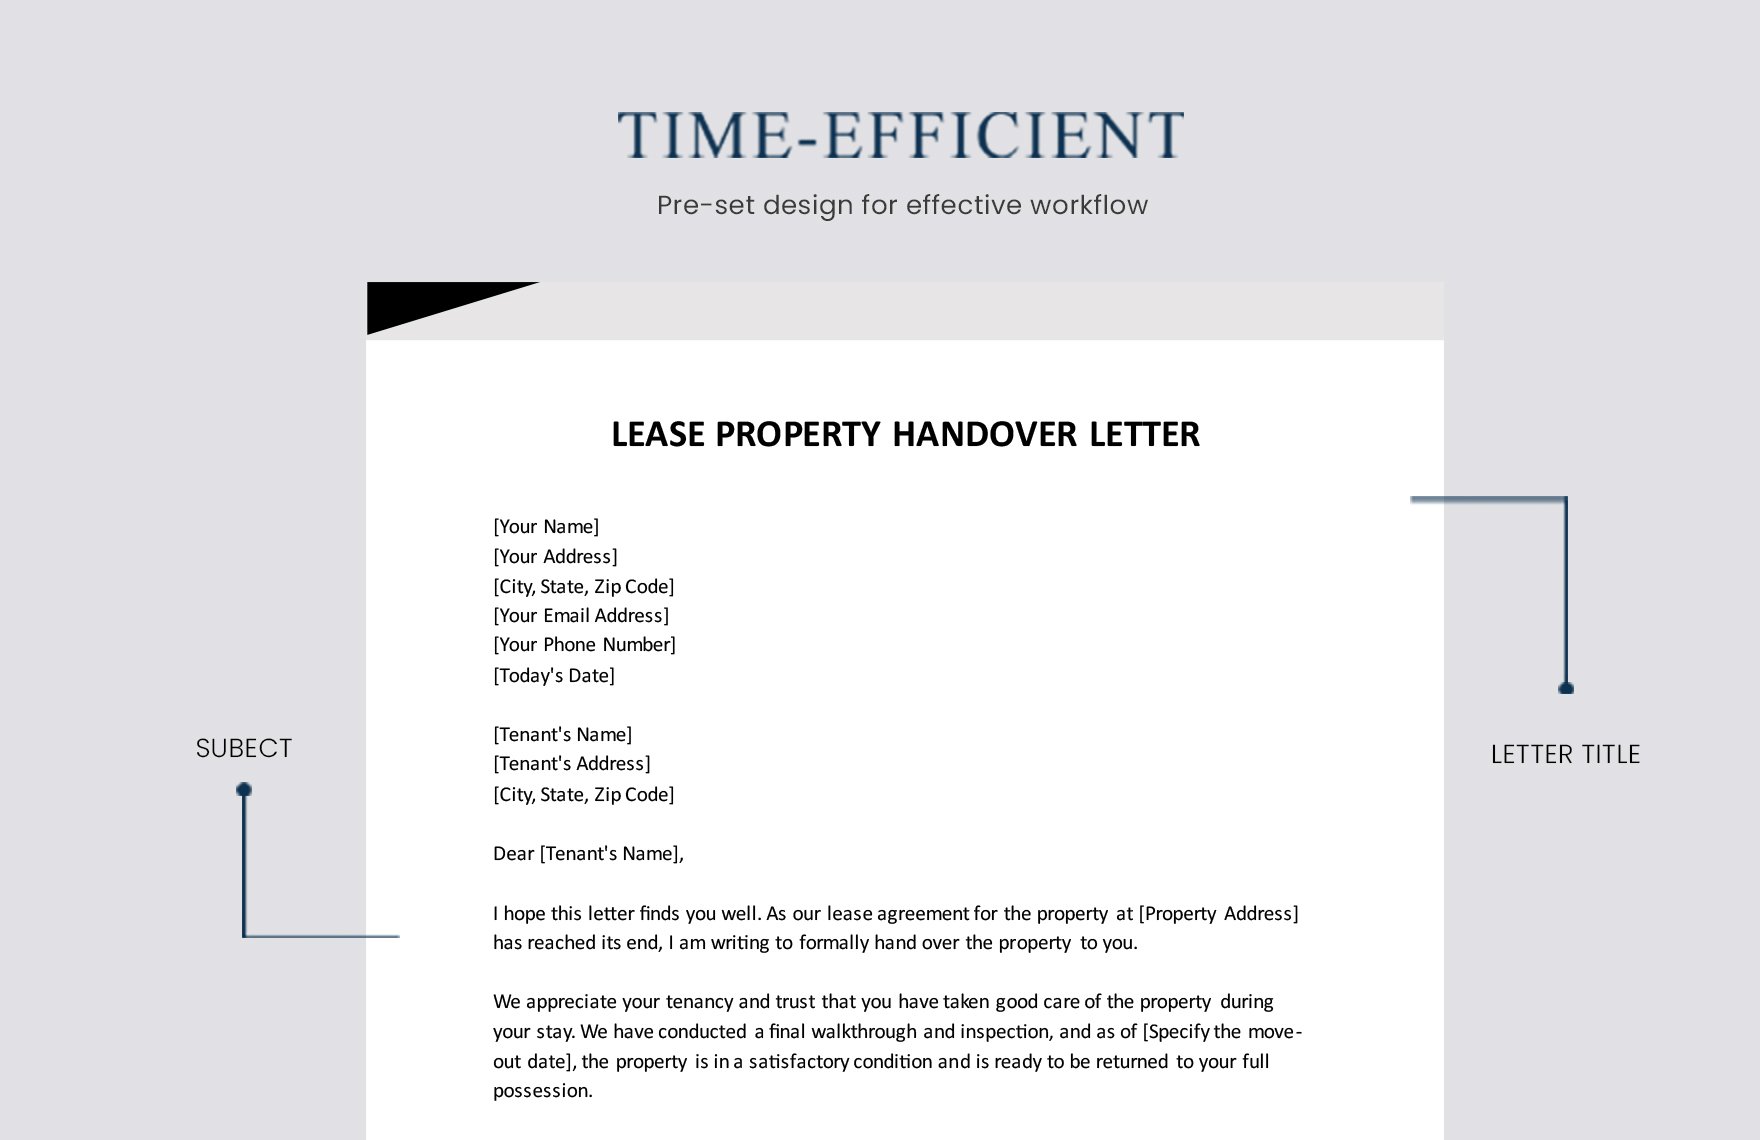 Lease Property Handover Letter